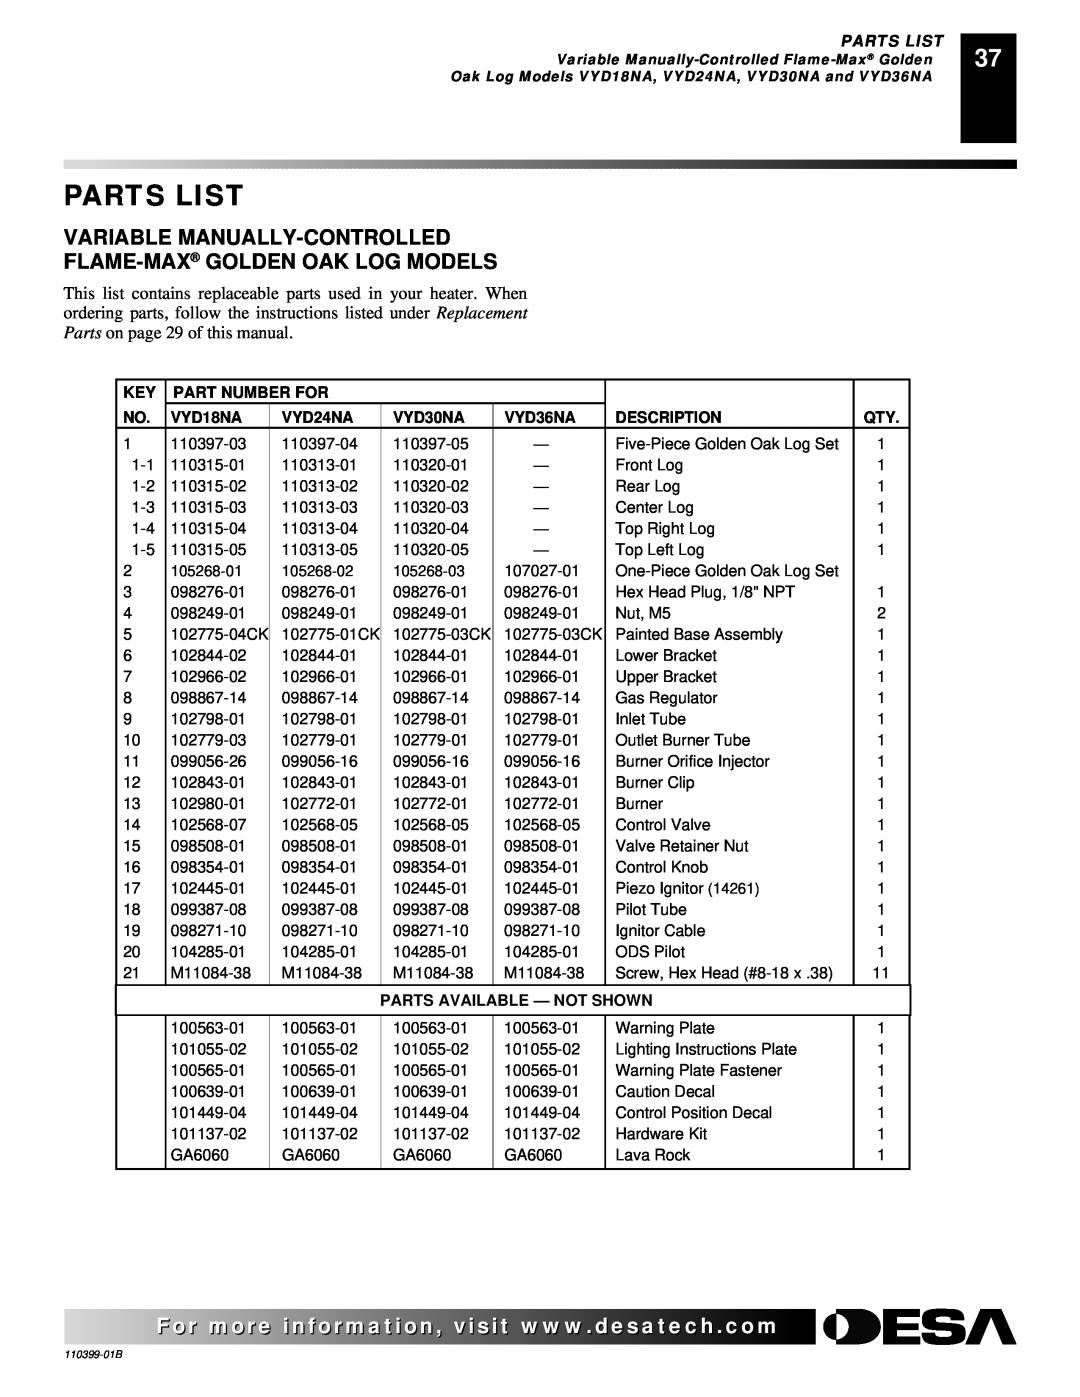 Desa LAME-MAX Golden Oak Parts List, Variable Manually-Controlled, Flame-Max Golden Oak Log Models, Part Number For 